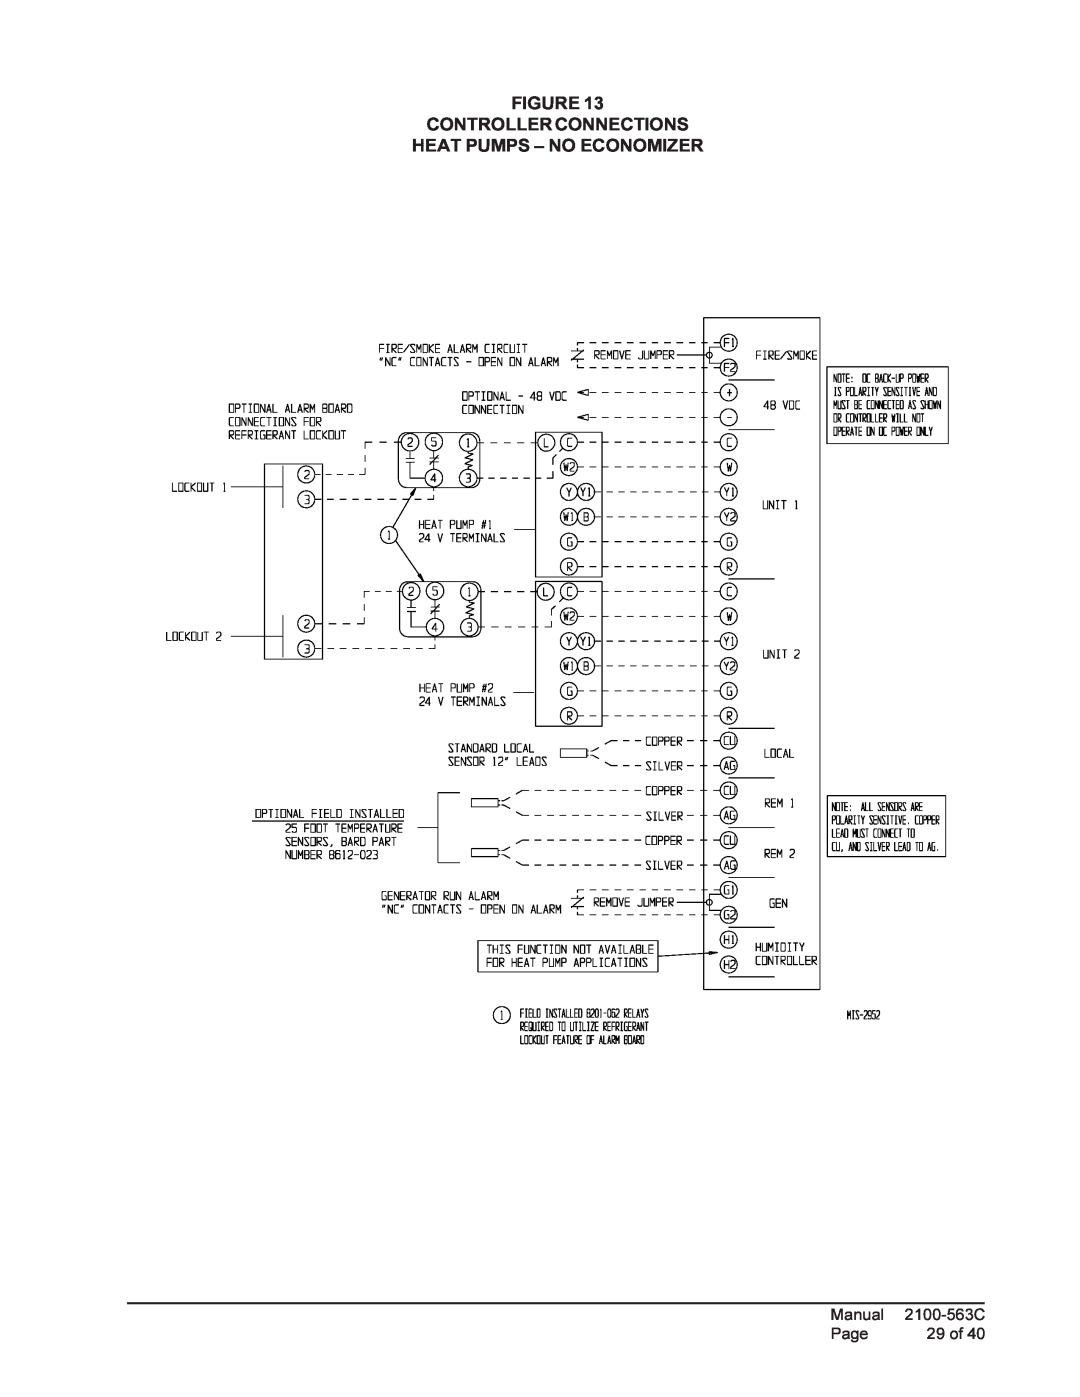 Bard MC4000 Figure Controllerconnections, Heat Pumps - No Economizer, Manual, Page, 29 of, 2100-563C 